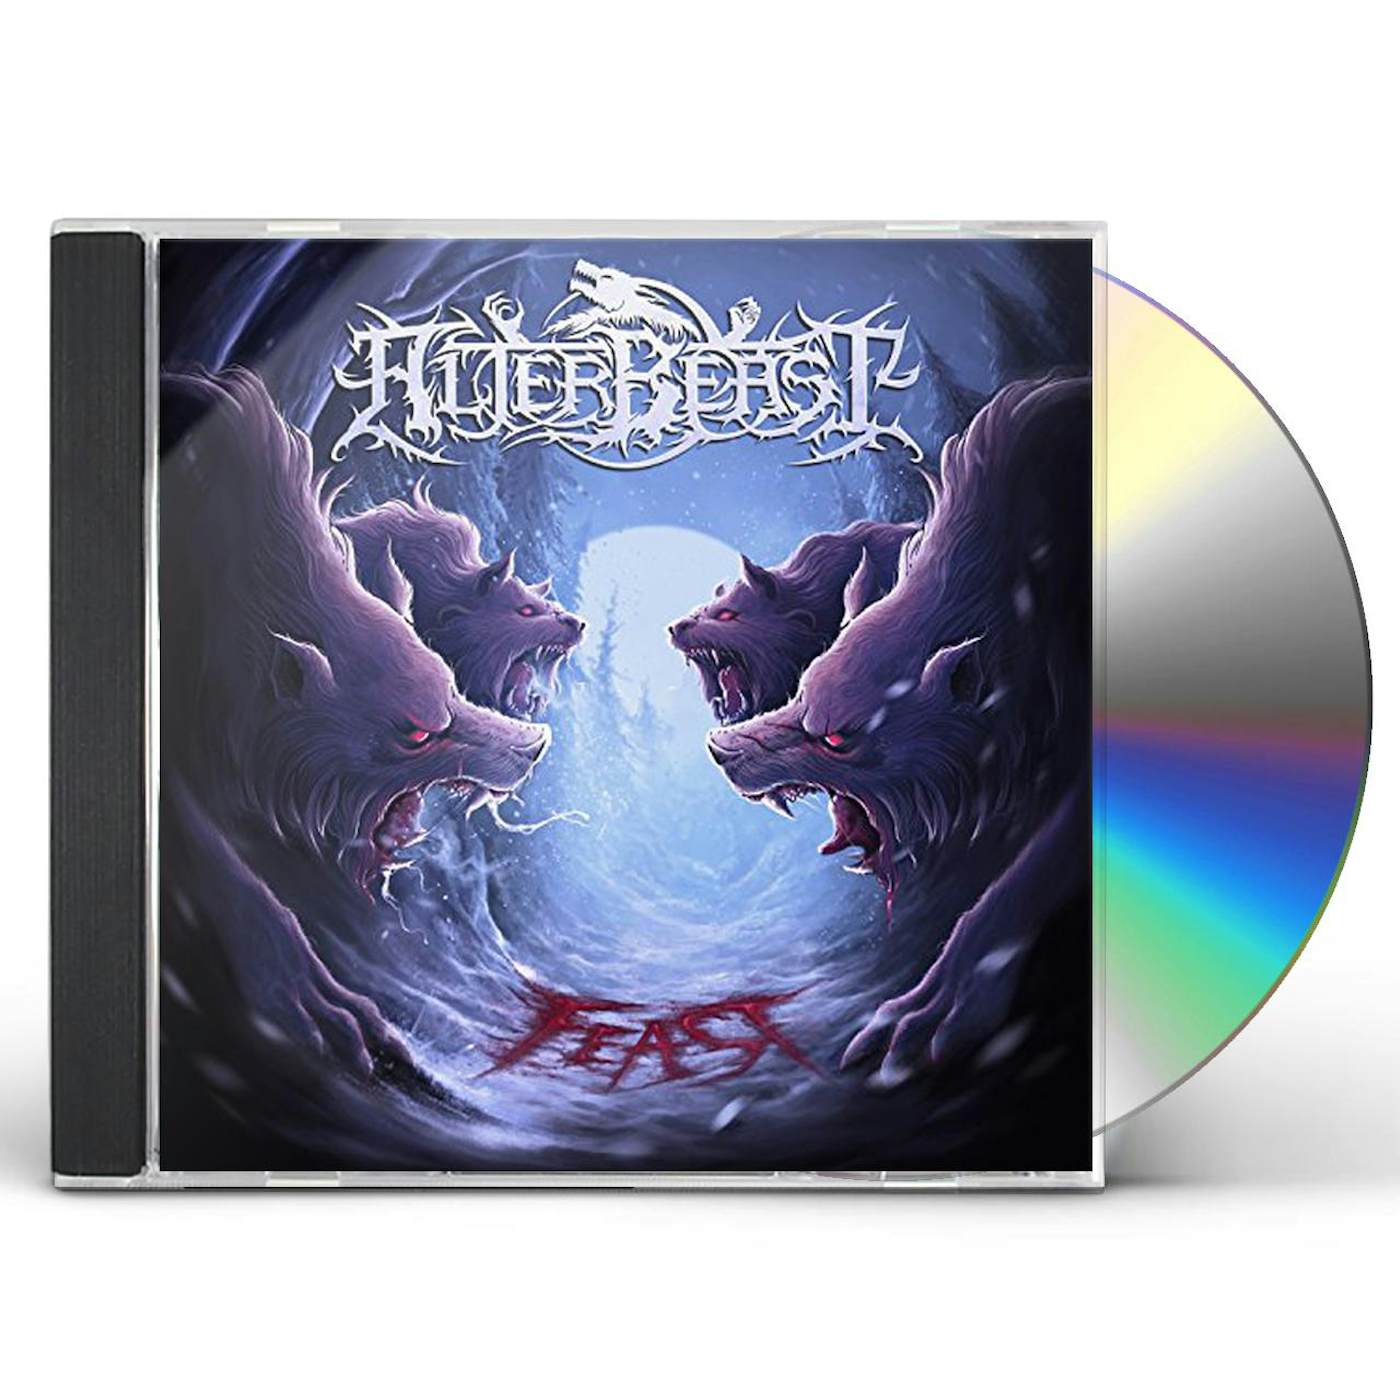 Alterbeast FEAST CD